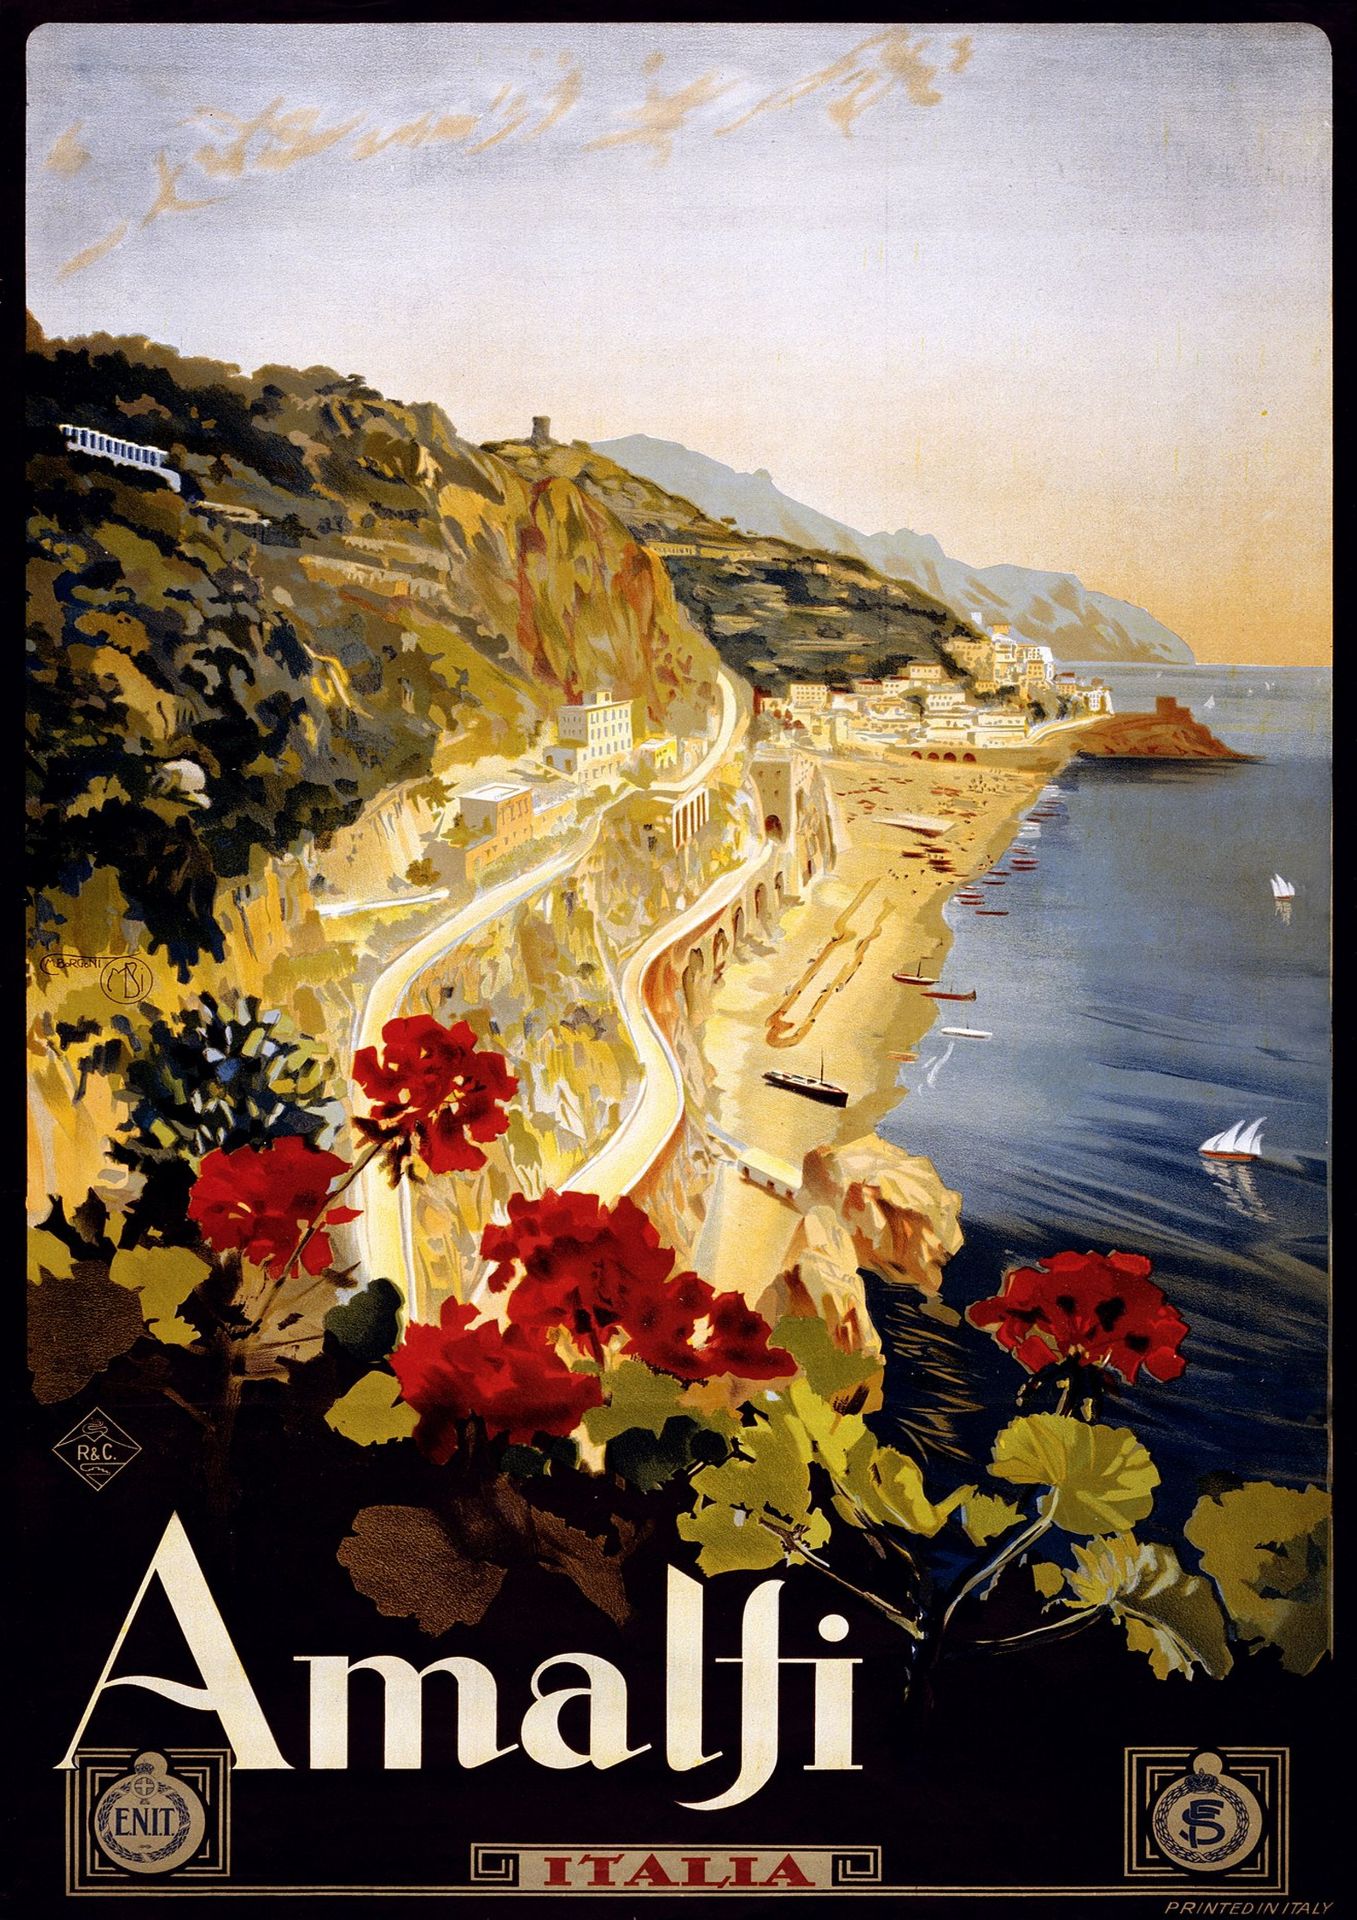 Amalfi, Italy Travel Poster